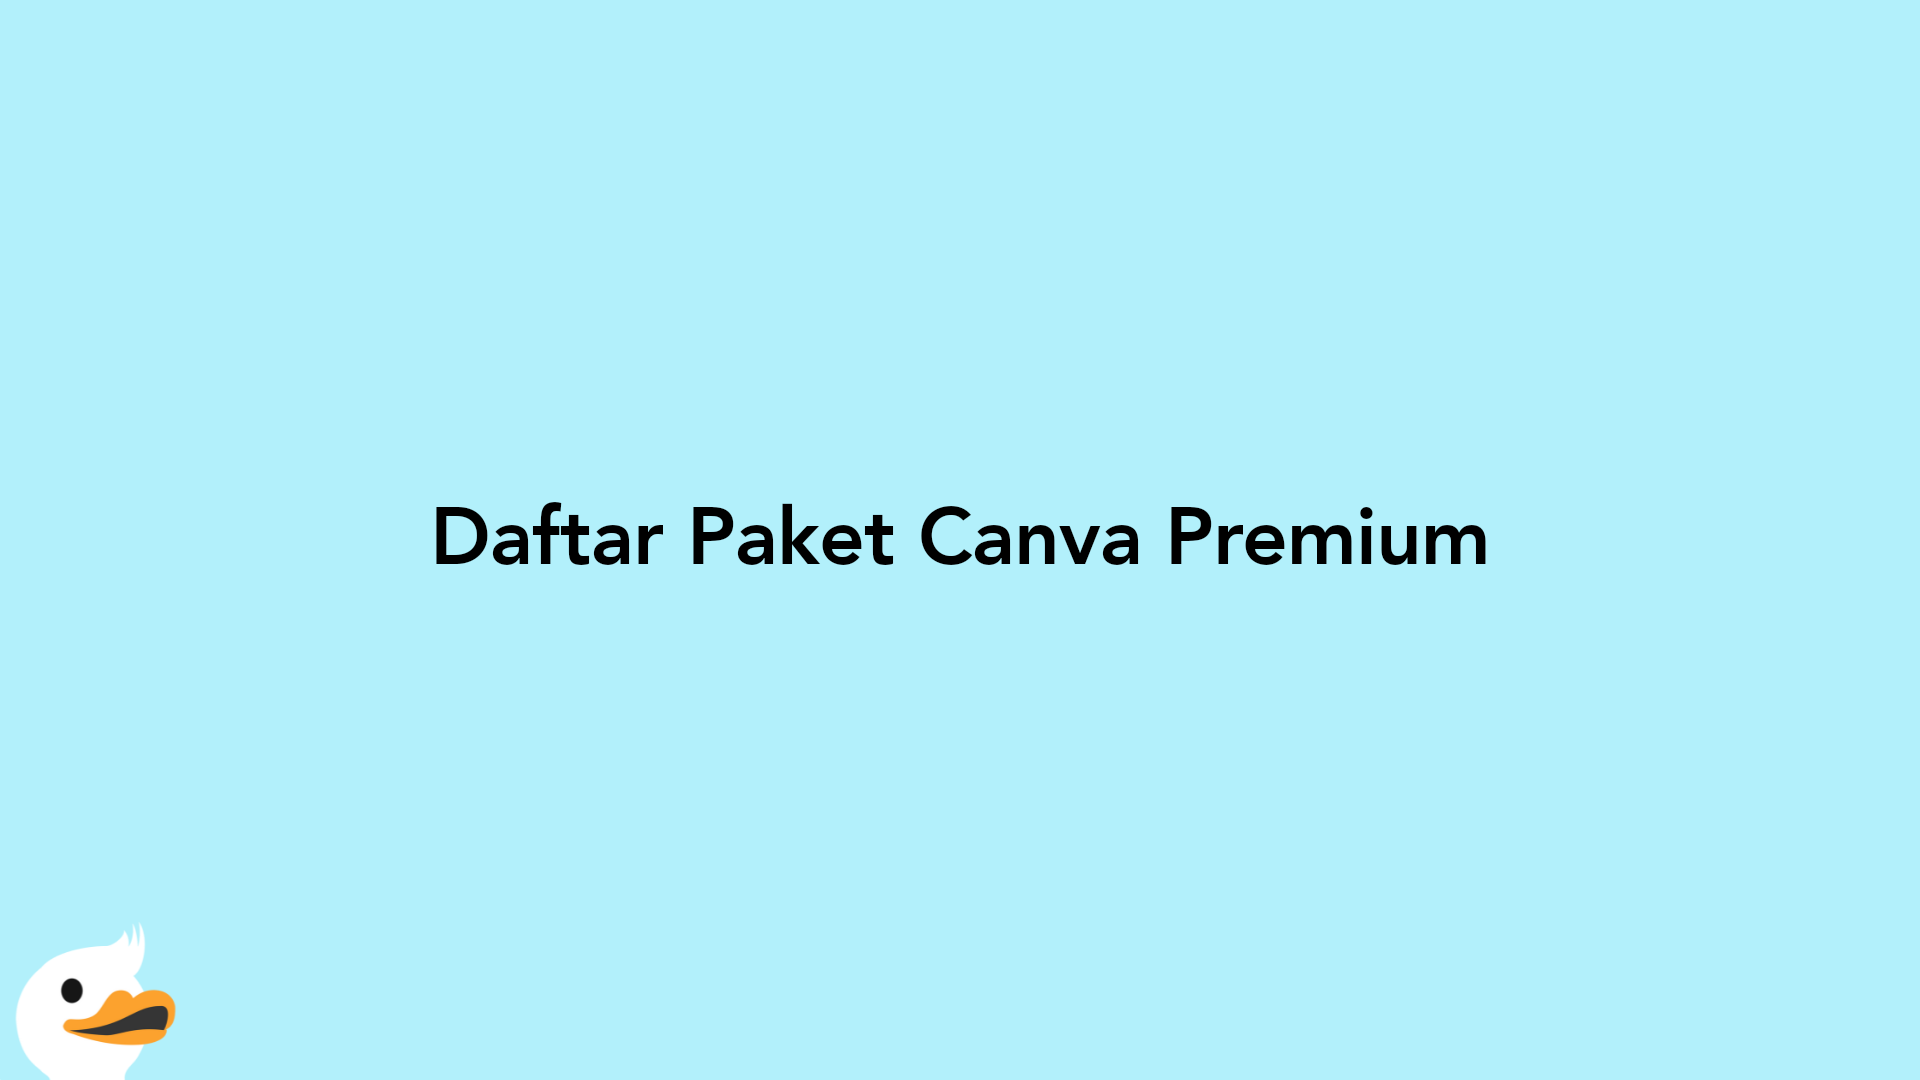 Daftar Paket Canva Premium